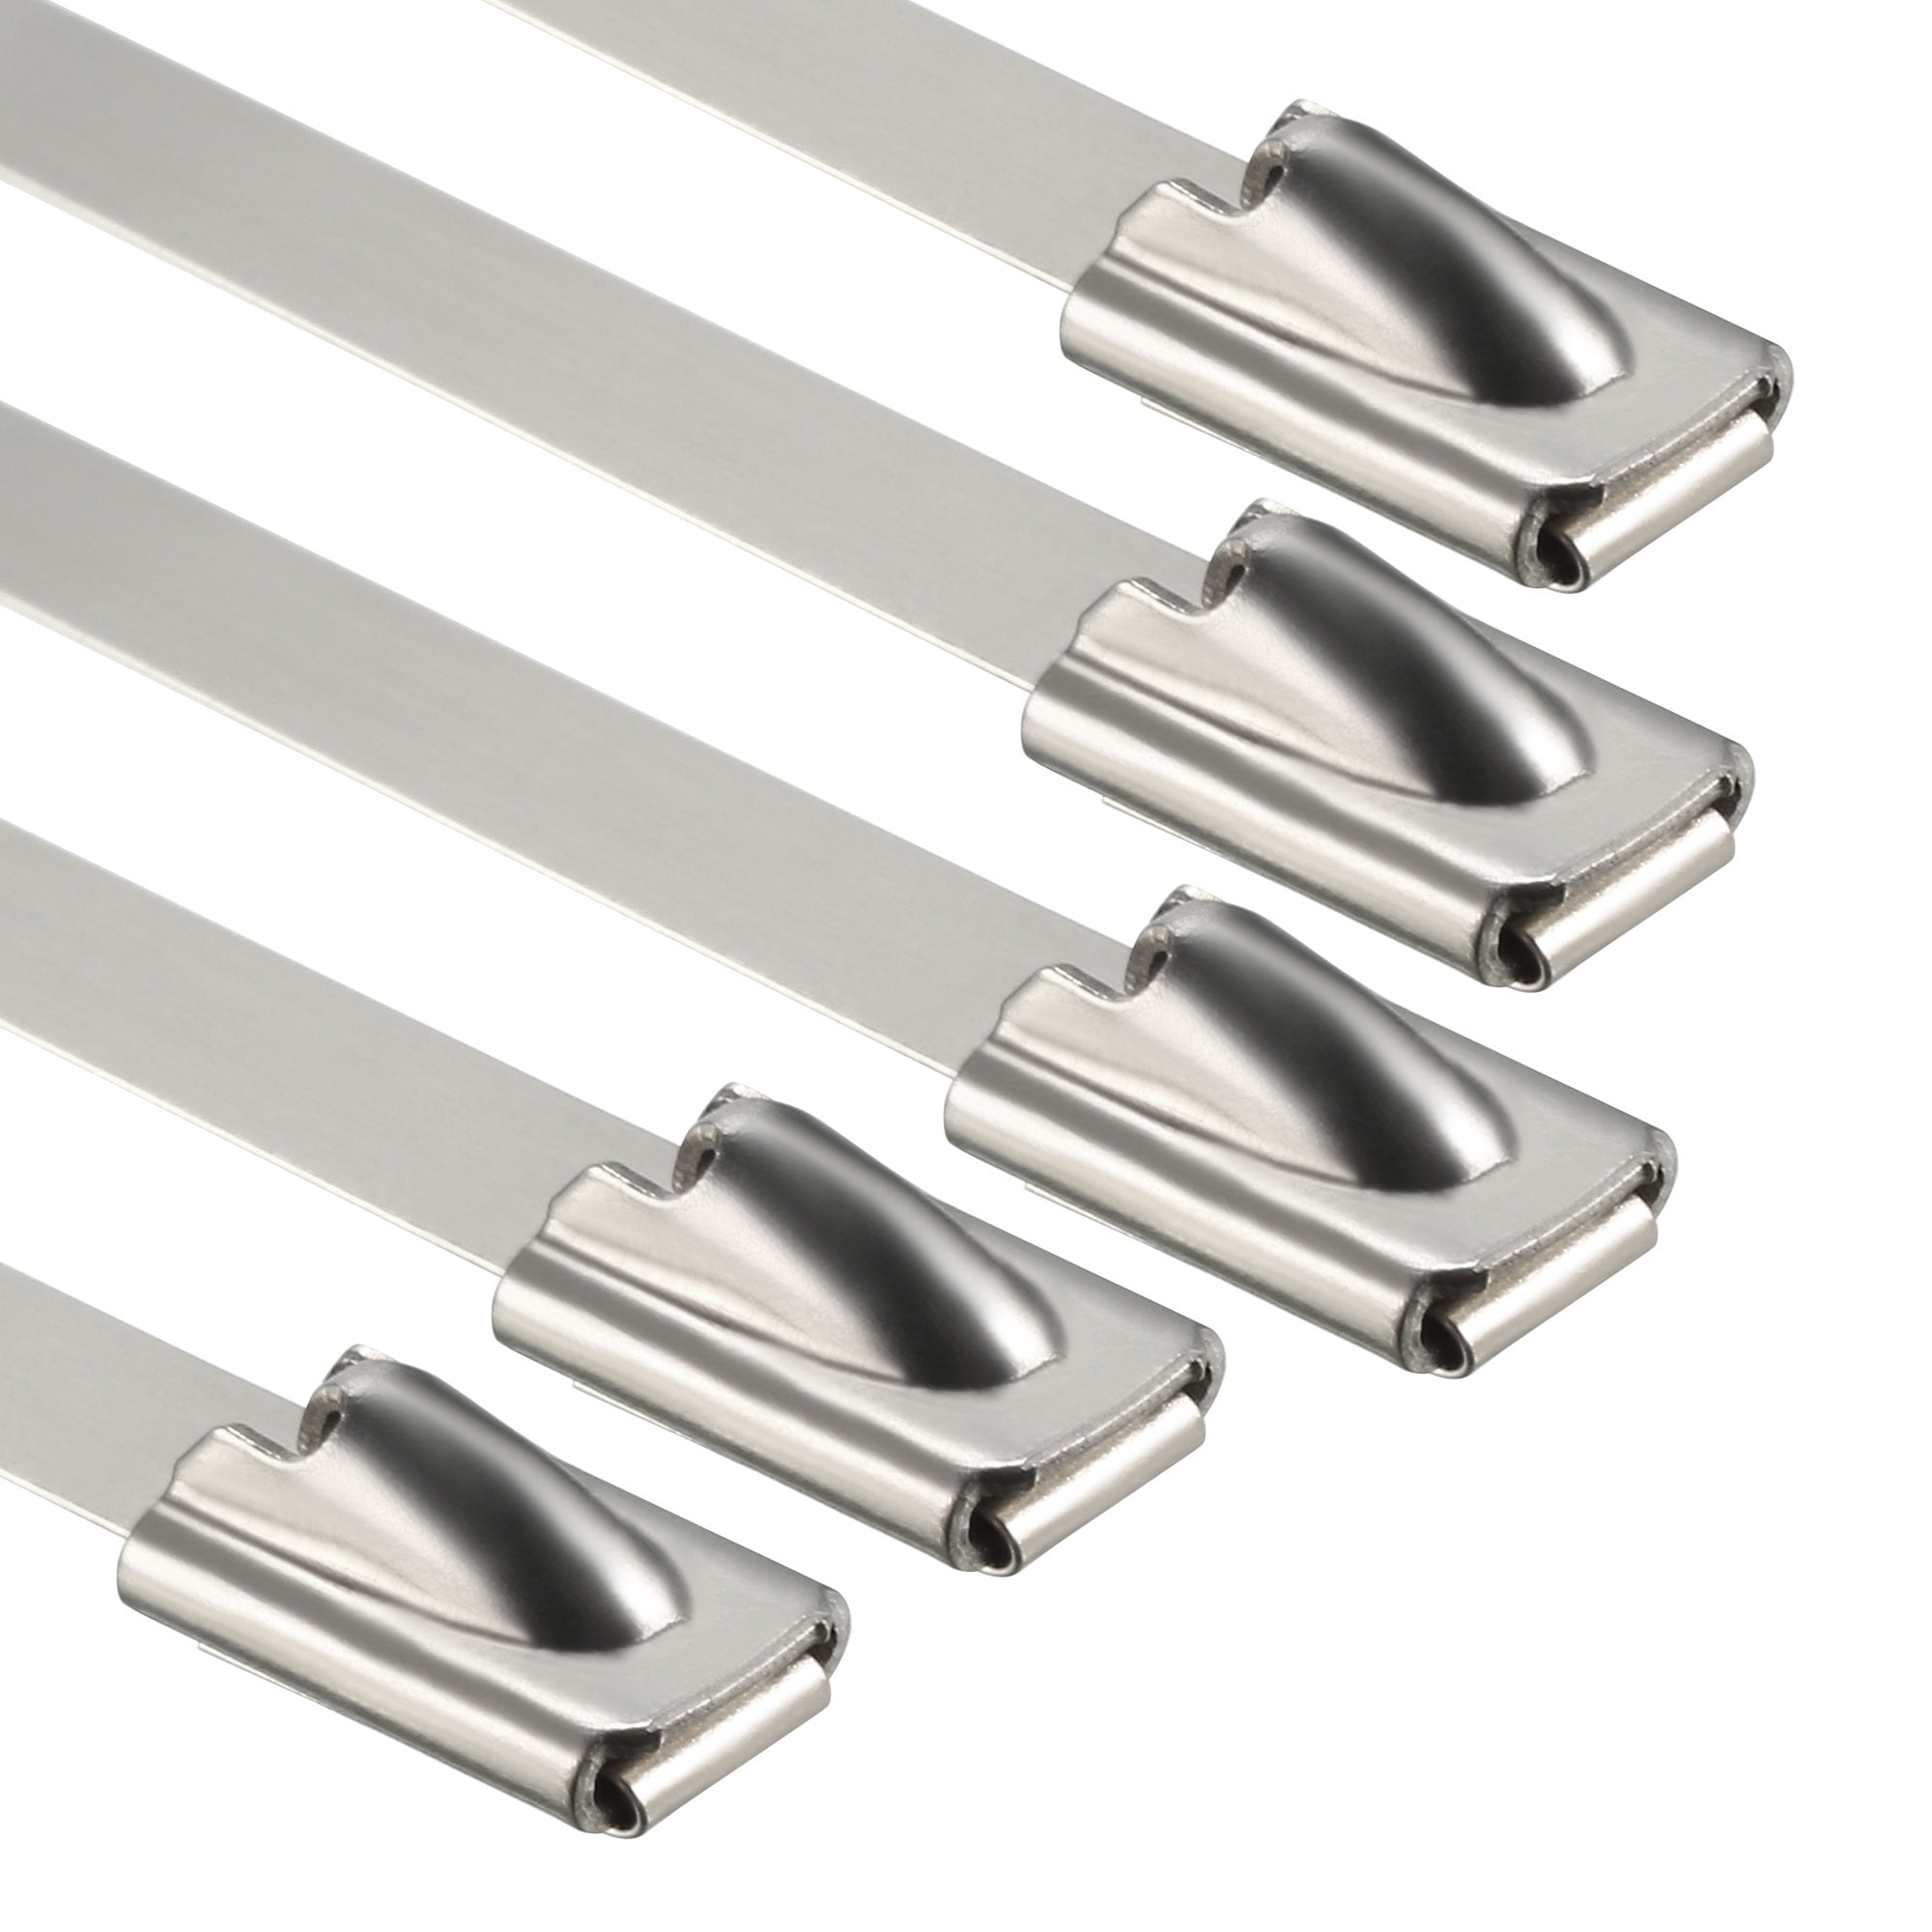 100pcs Stainless Steel Metal Cable Ties Fasteners Zip Ties Strong Heavy Duty 